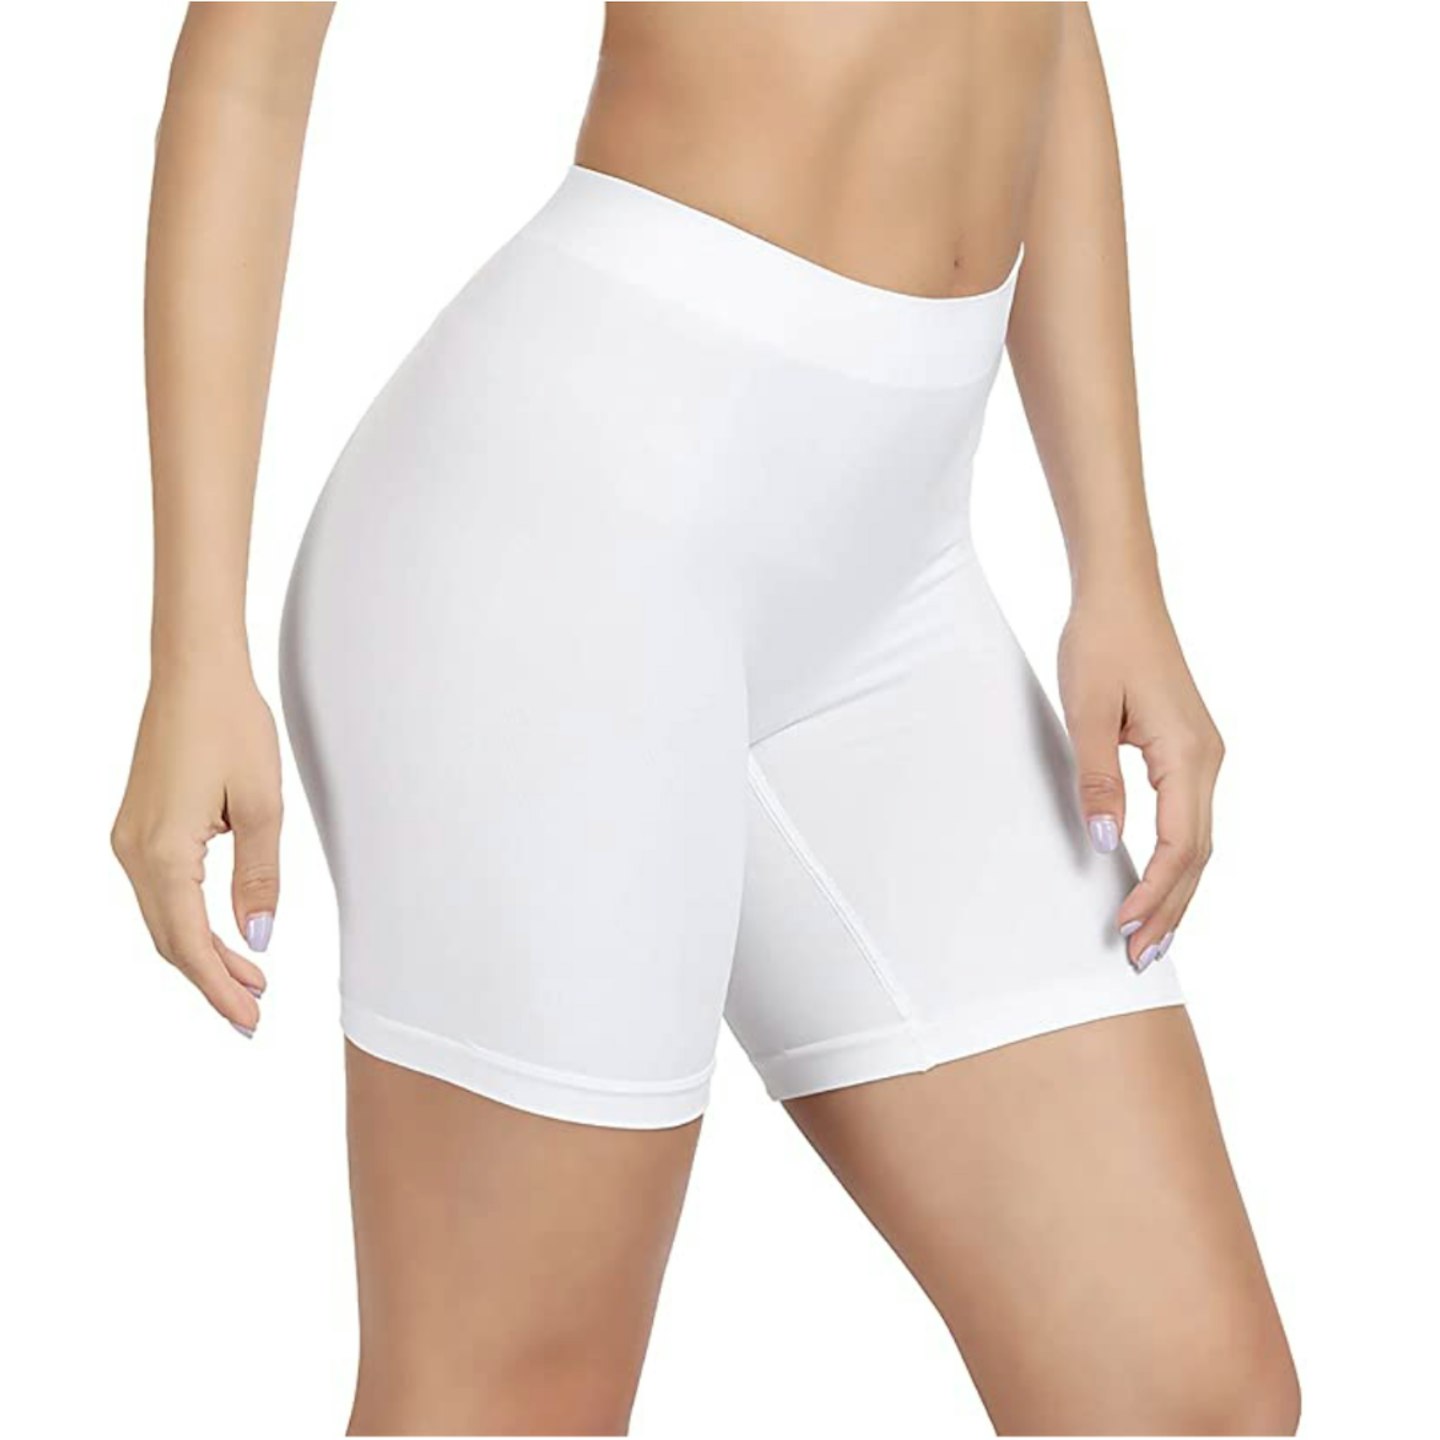 SIHOHAN Womens Slip Shorts in White